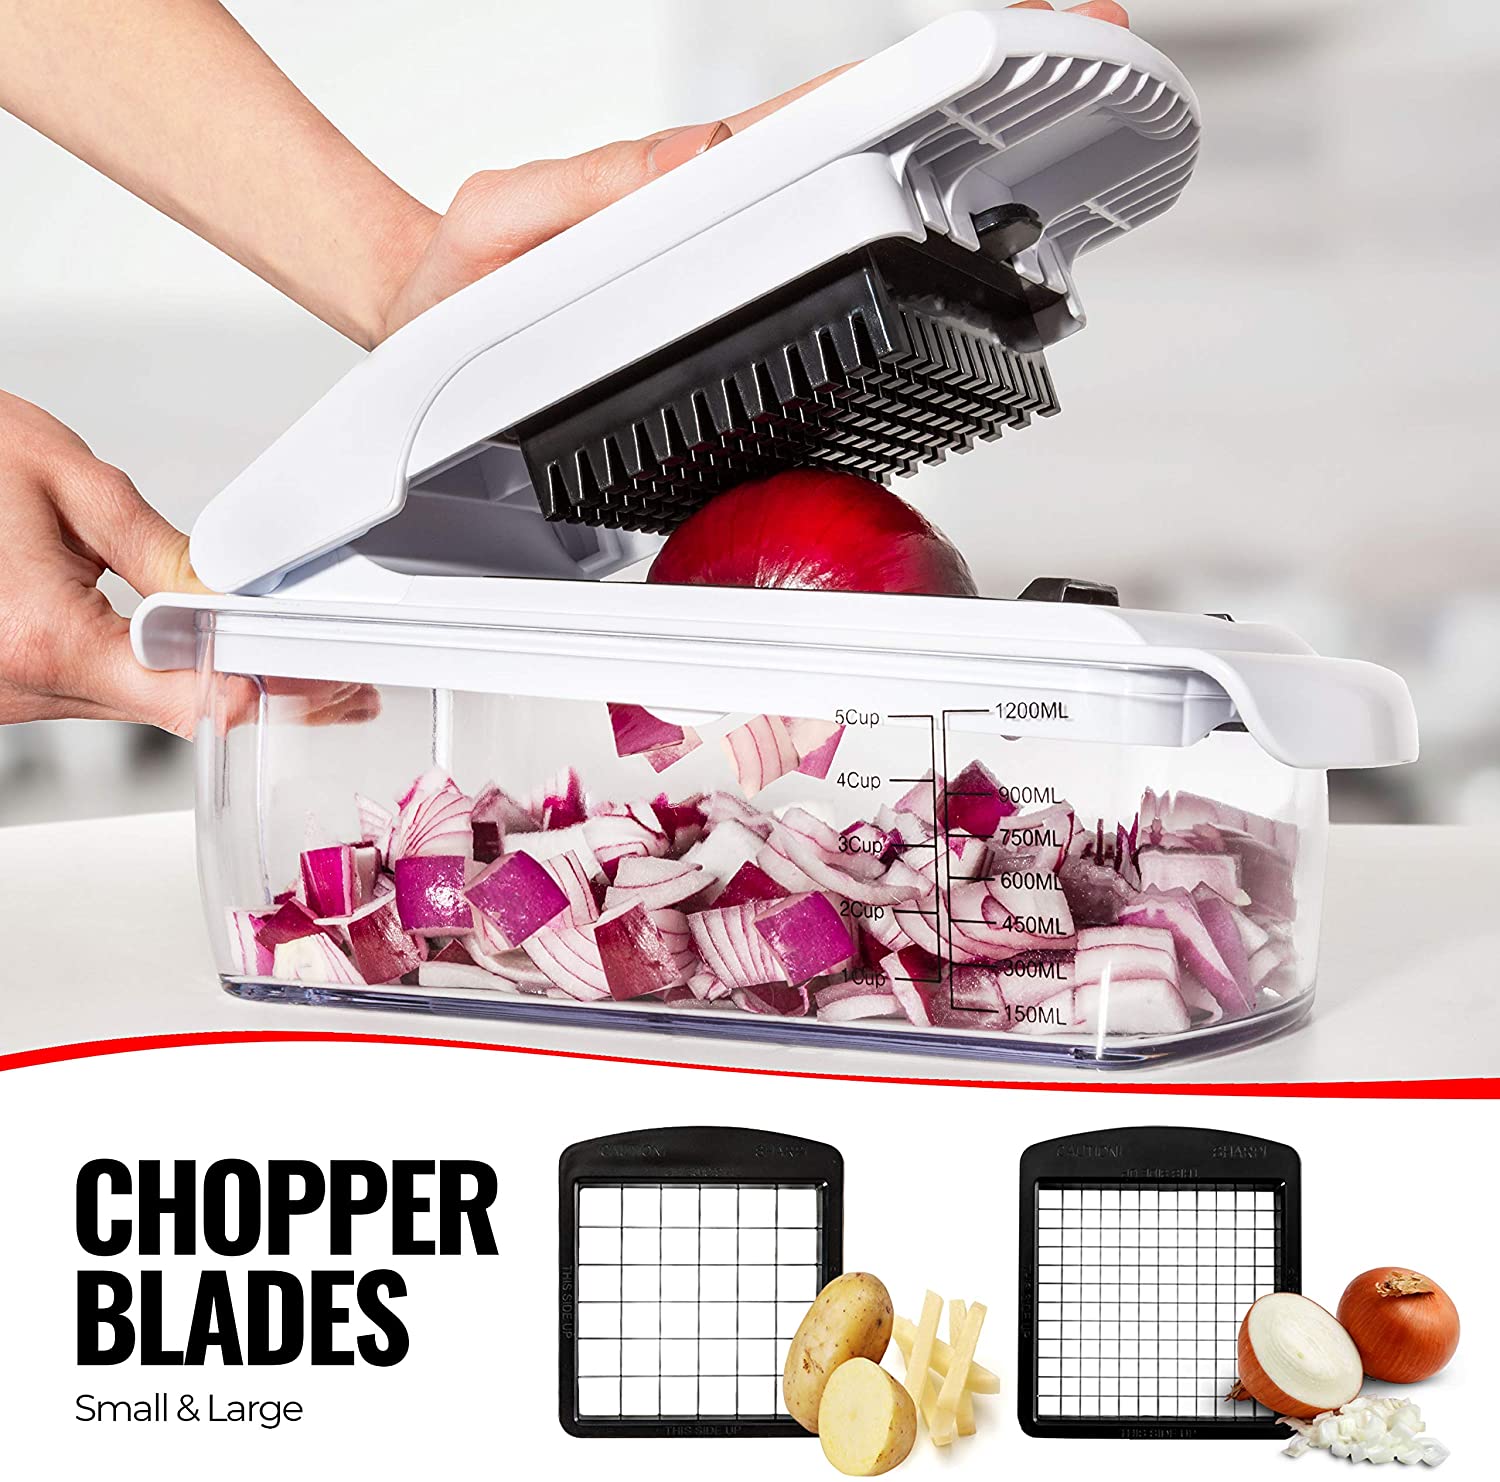 Fullstar 9-in-1 Deluxe Vegetable Chopper Kitchen Gifts | Onion Chopper & Dicer